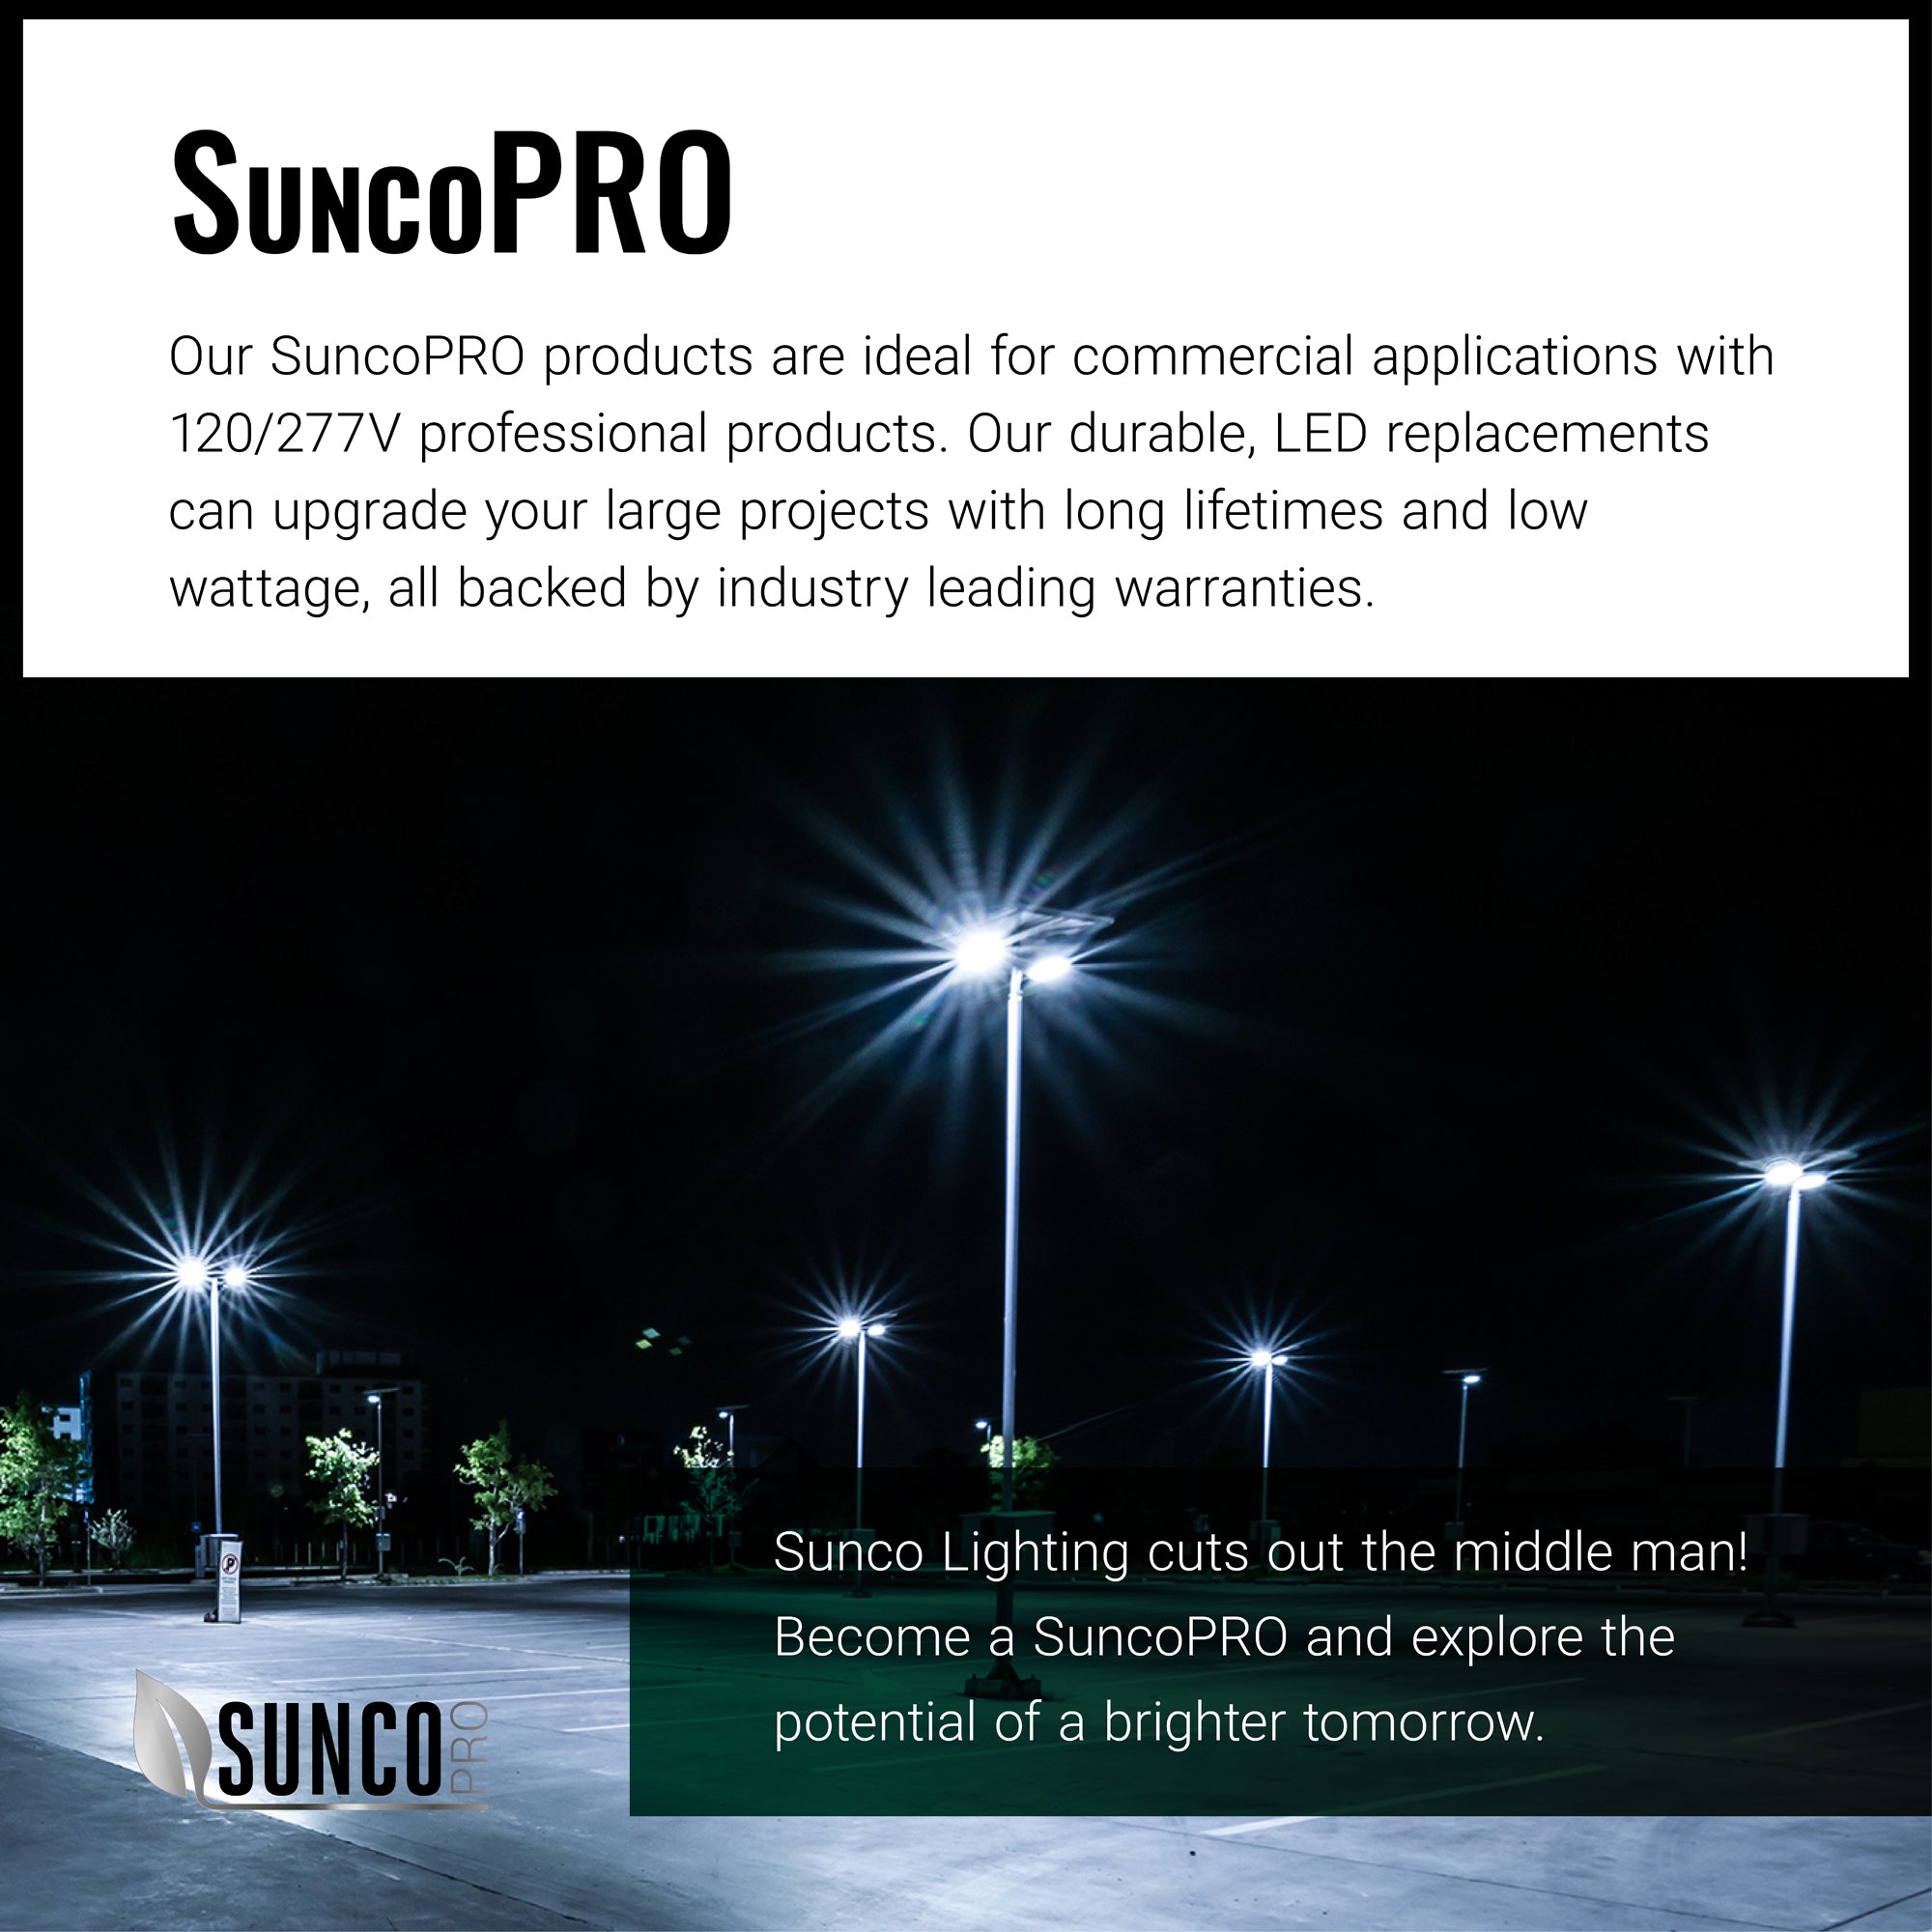 Shoebox LED 150W Parking Light Fixture LED LIGHTING SUNCO – Sunco  Lighting